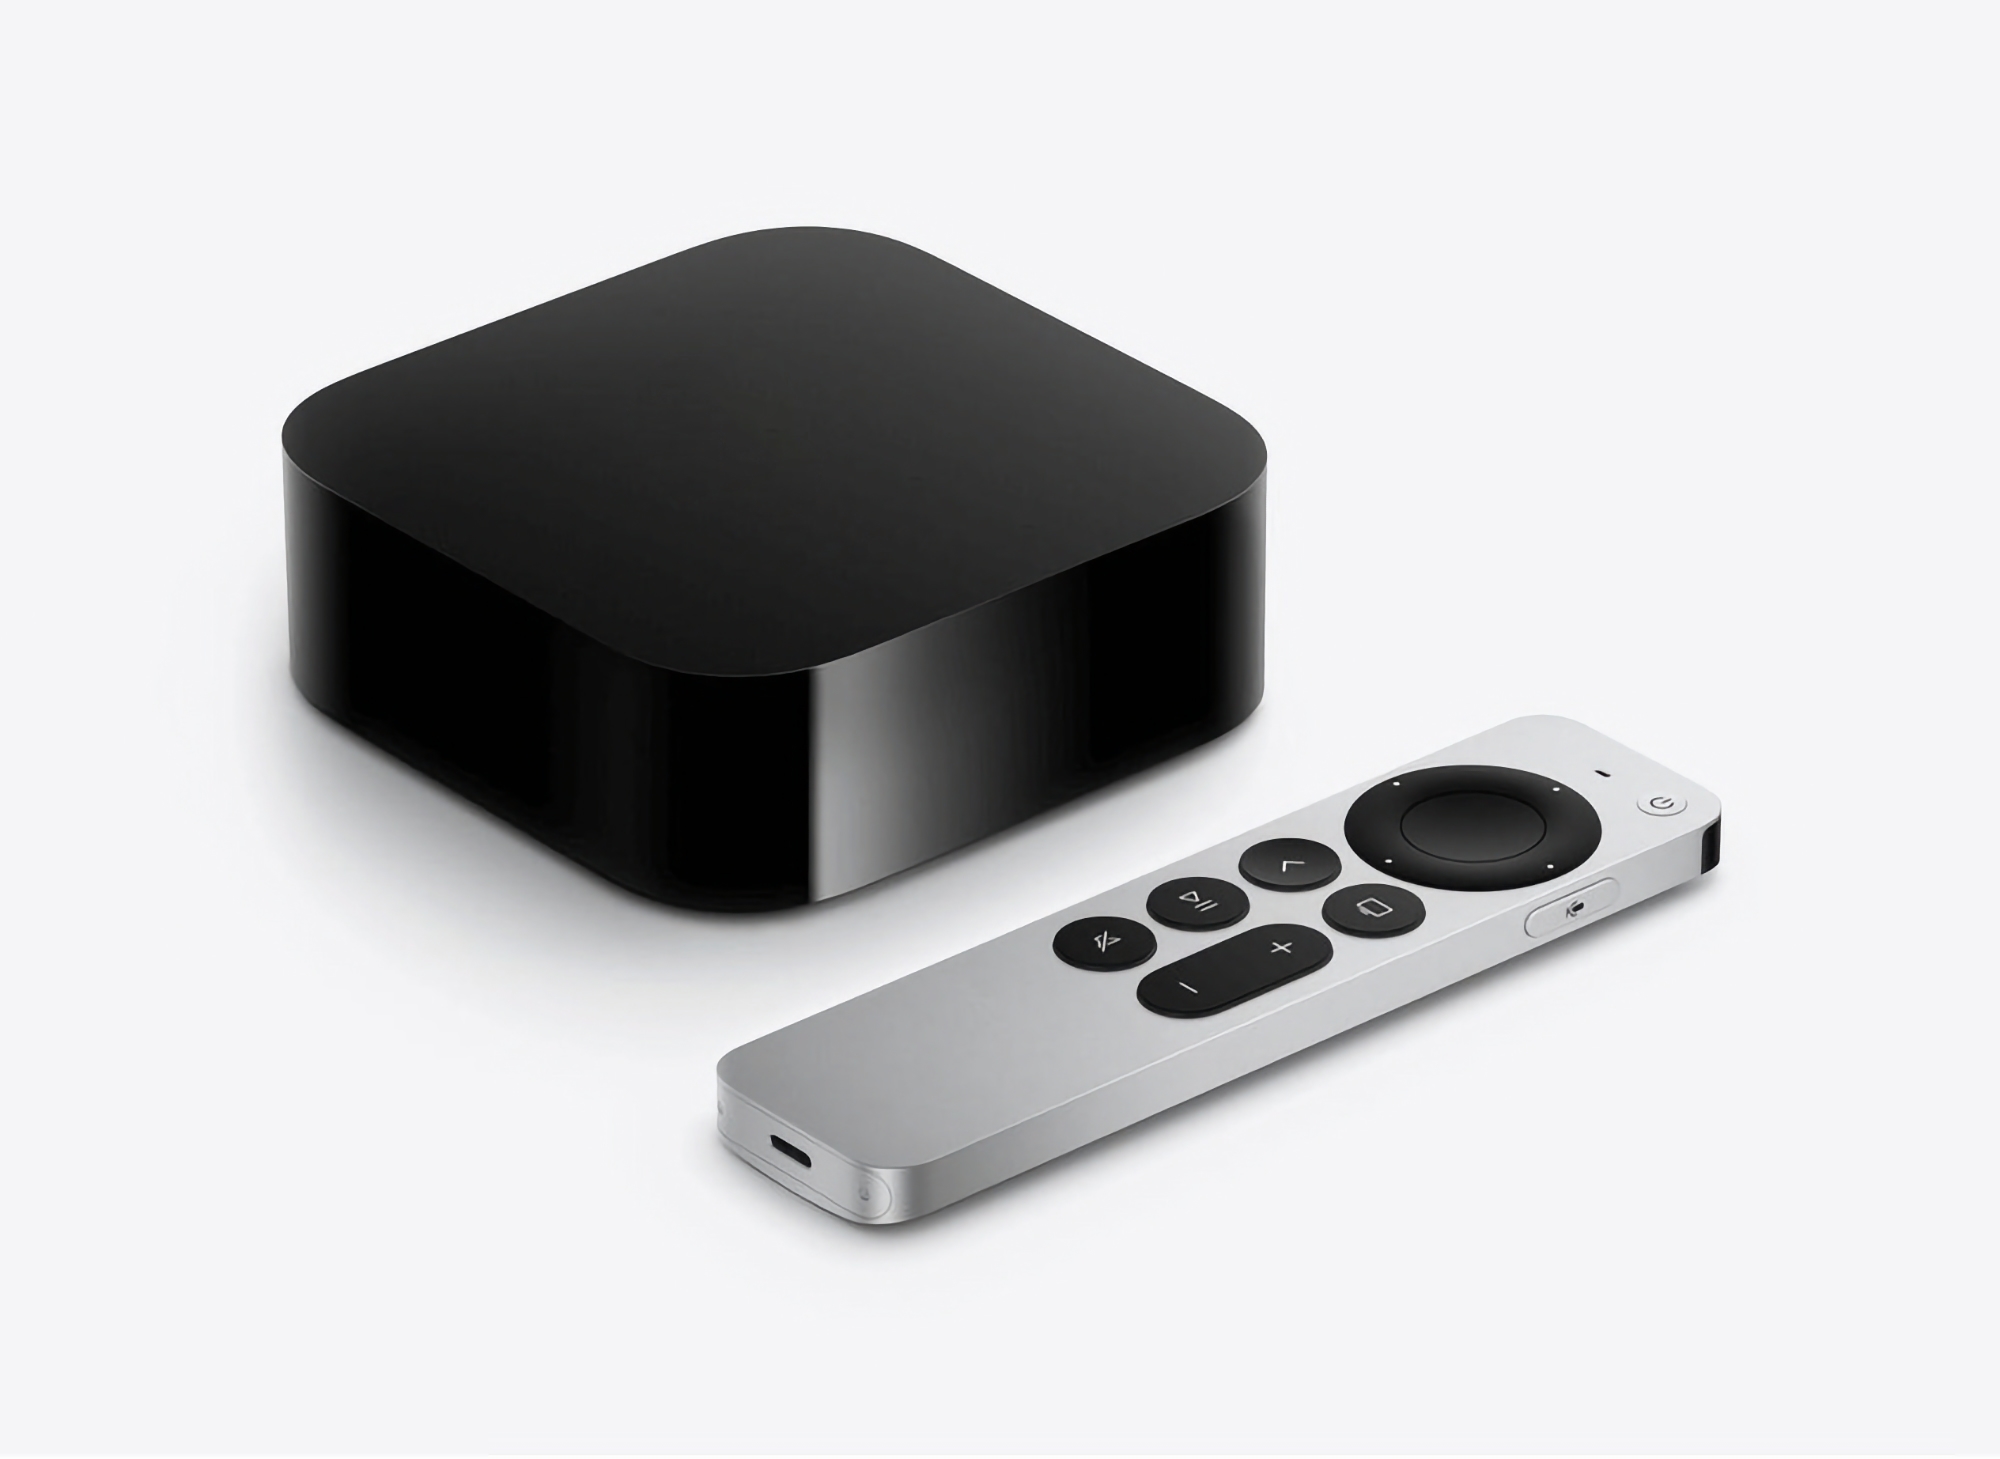 Ikke bare hodetelefoner: Sonos lanserer en Apple TV-analog med proprietære tjenester og Android ombord.